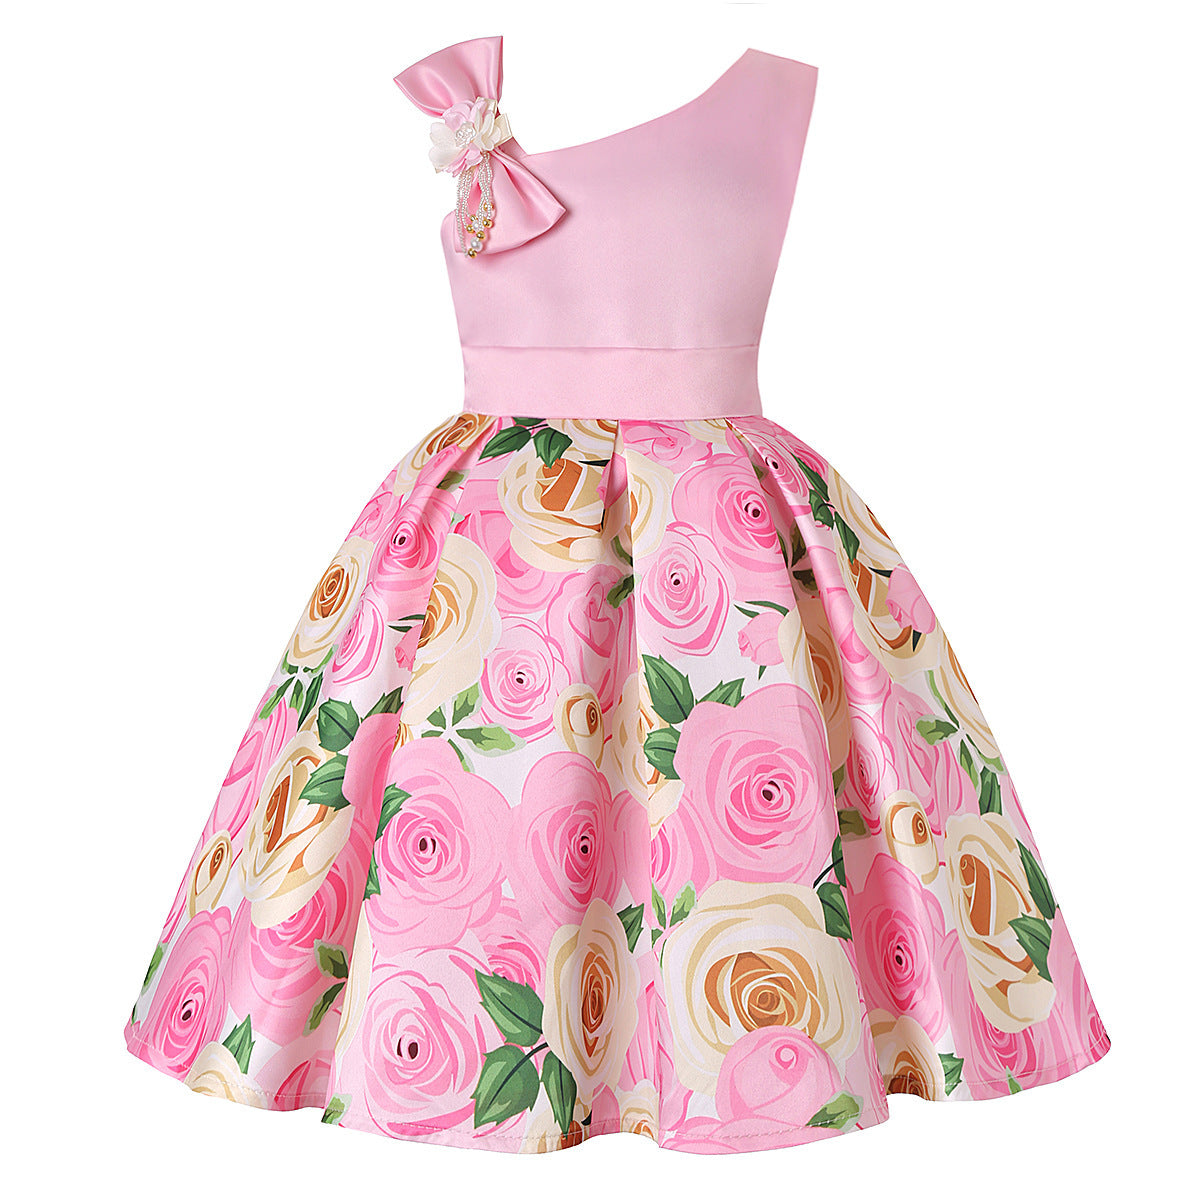 Girls' Dresses Girls' Princess Dresses Digital Print Children's Dresses